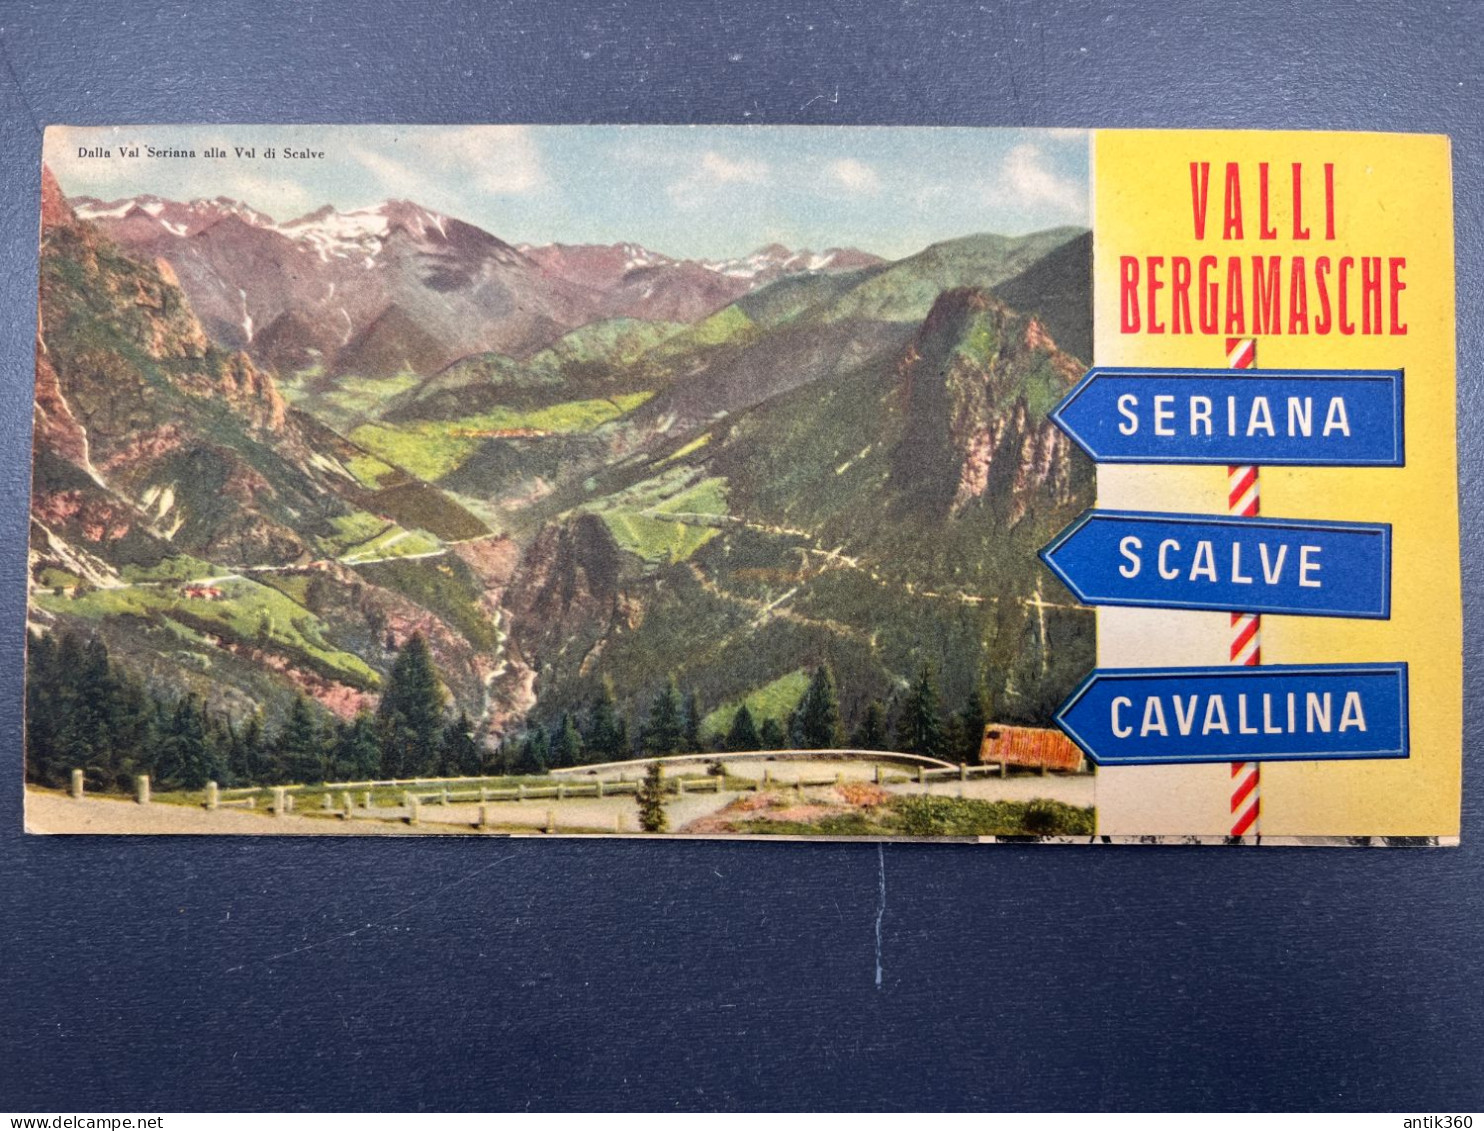 Ancien Dépliant Touristique Pop-Up Valli Bergamasche Seriana Scalve Cavallina Italie - Reiseprospekte